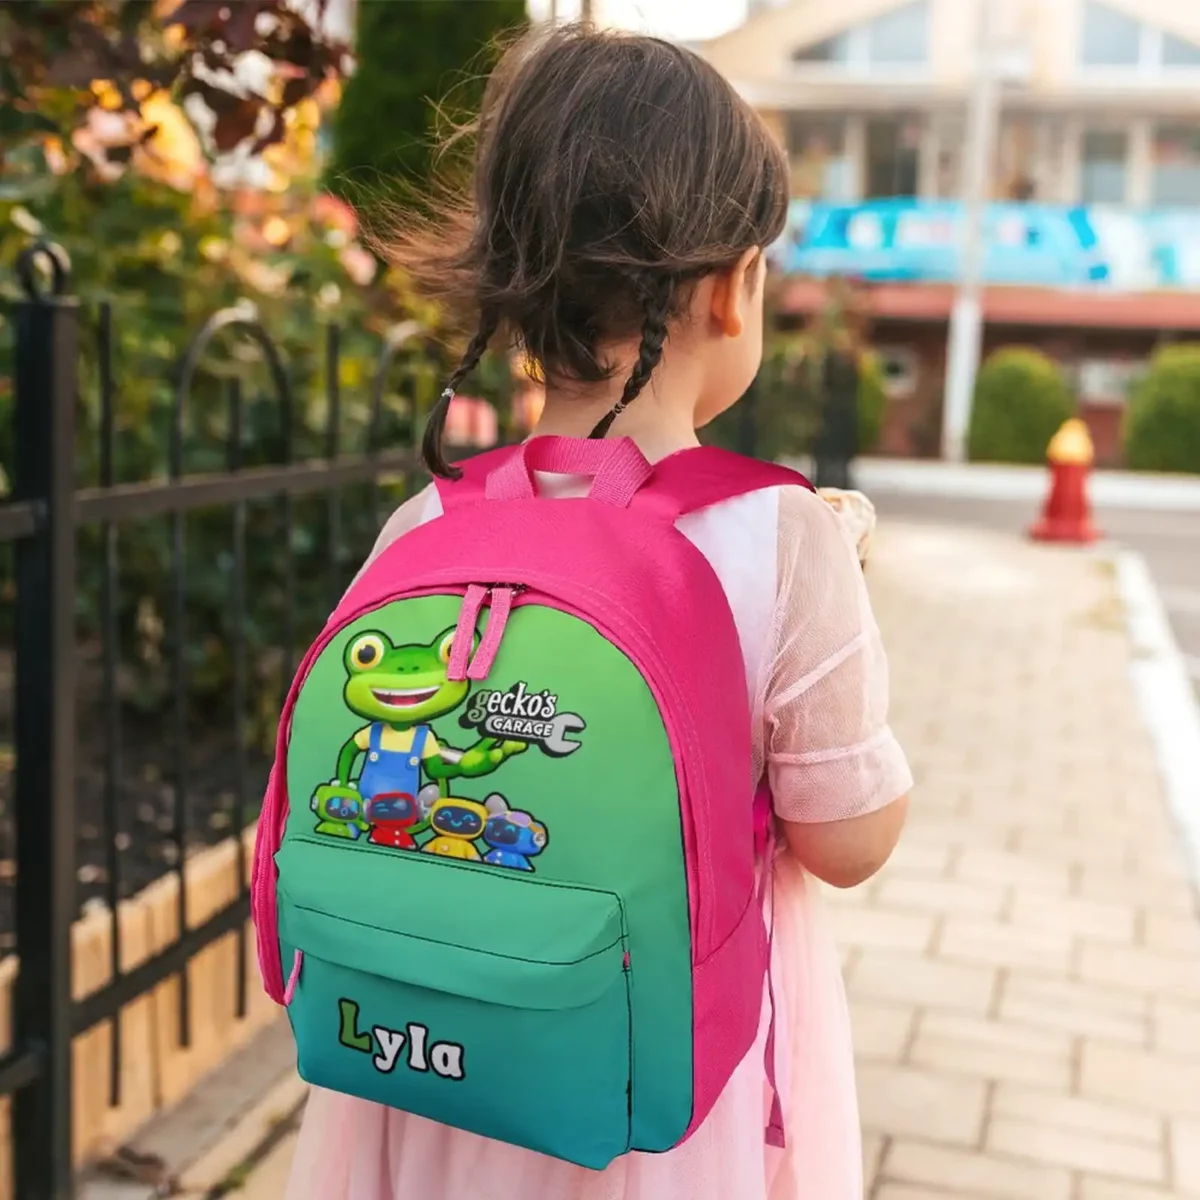 Gecko’s Garage Animated Series Character Children’s School Bag Cool Kiddo 12